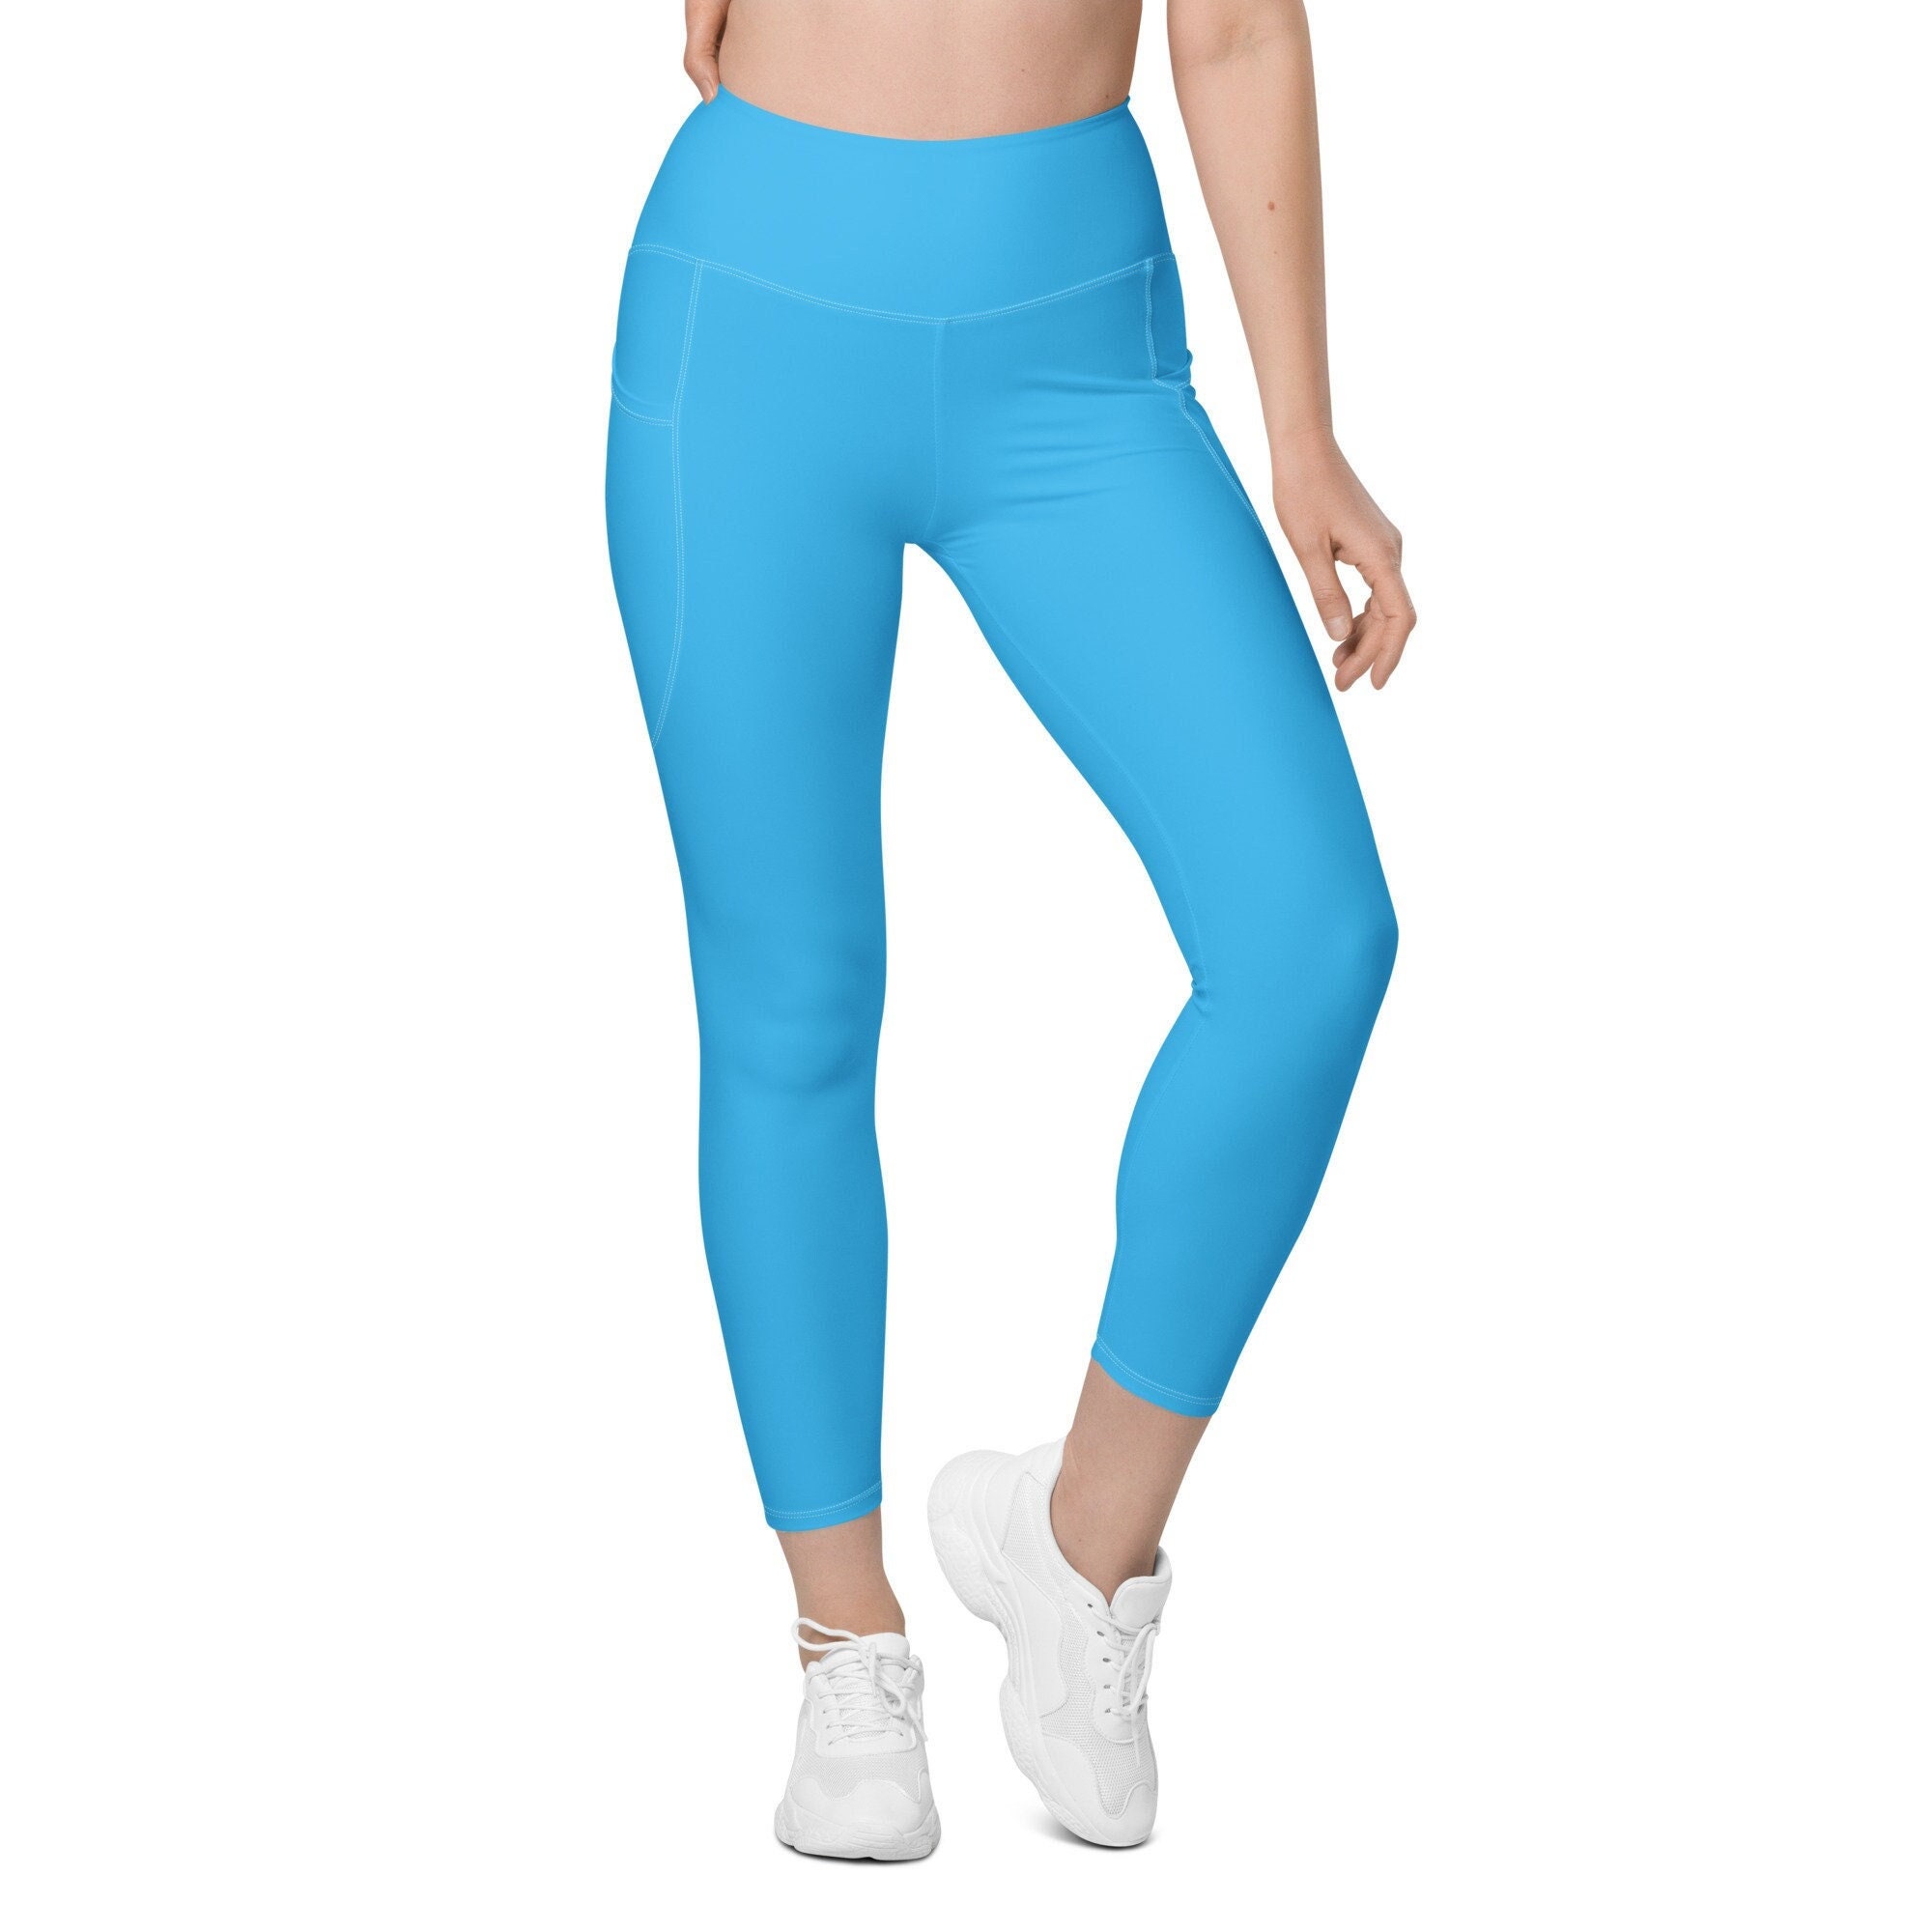 Sky Blue Yoga Leggings, Turquoise Yoga Shorts or Capri Yoga Pants, Bike  Shorts and Workout Leggings for Women, Many Sizes 